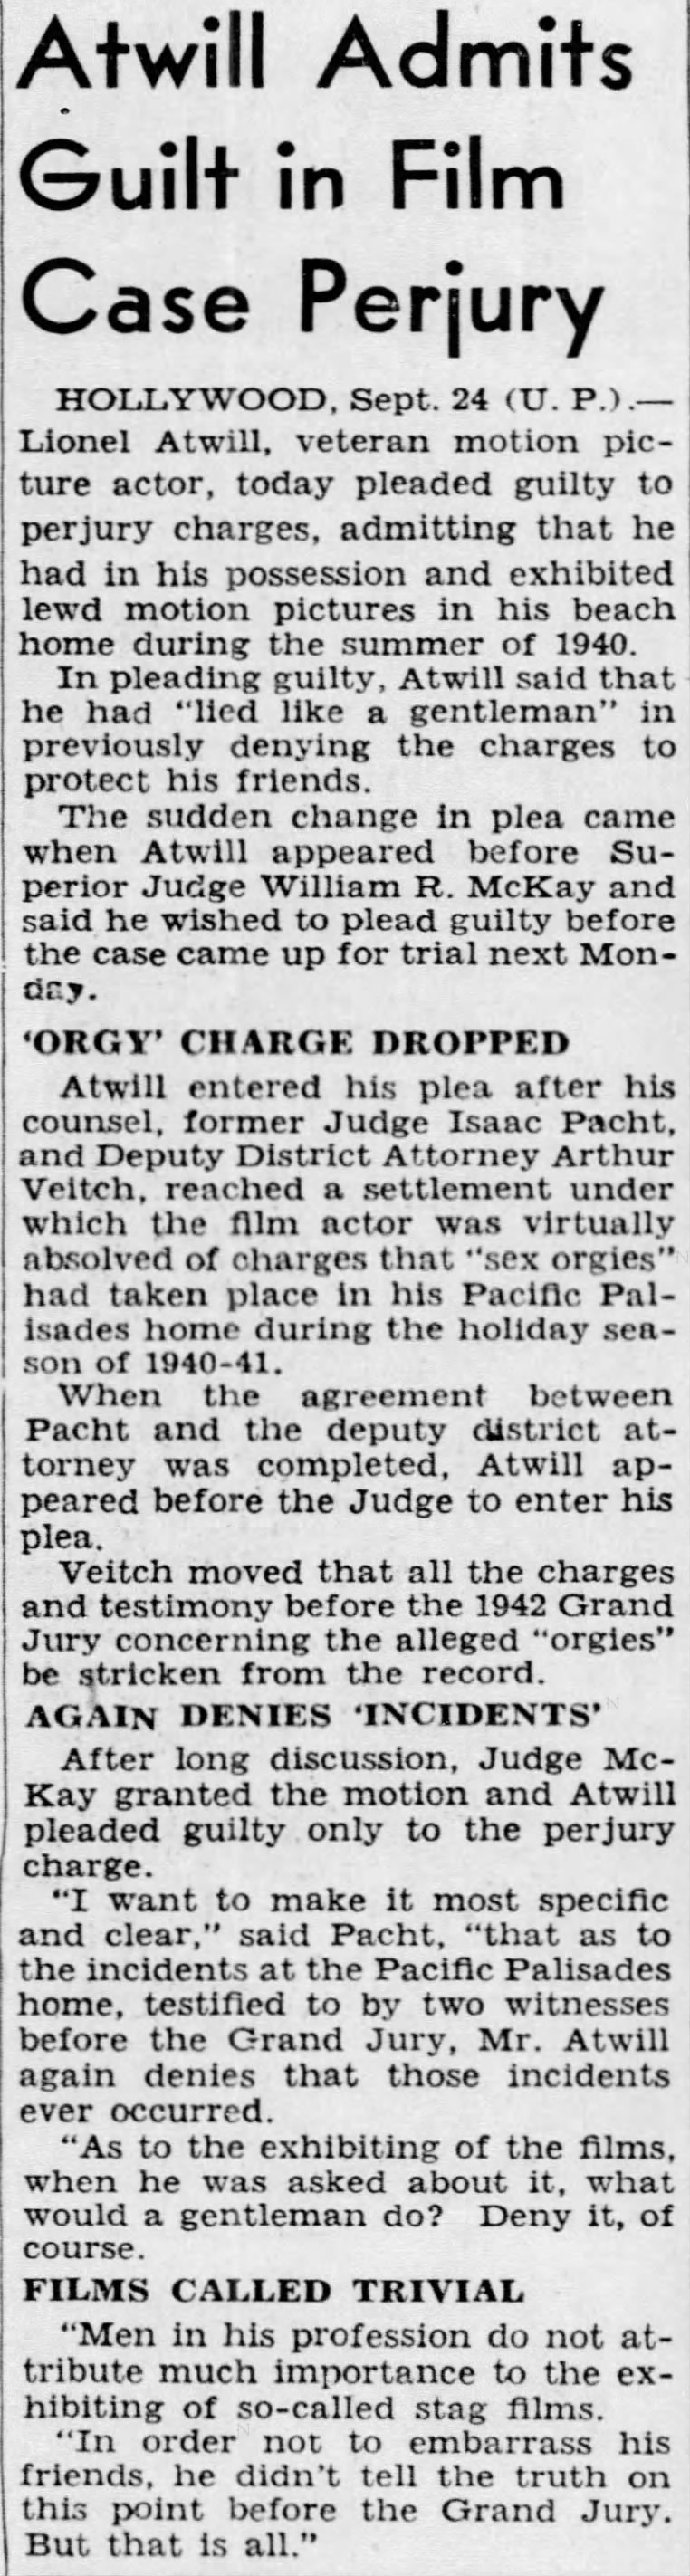 Atwill admits guilt in film case perjury - Sept 24 1942 Philadelphia Enquirer